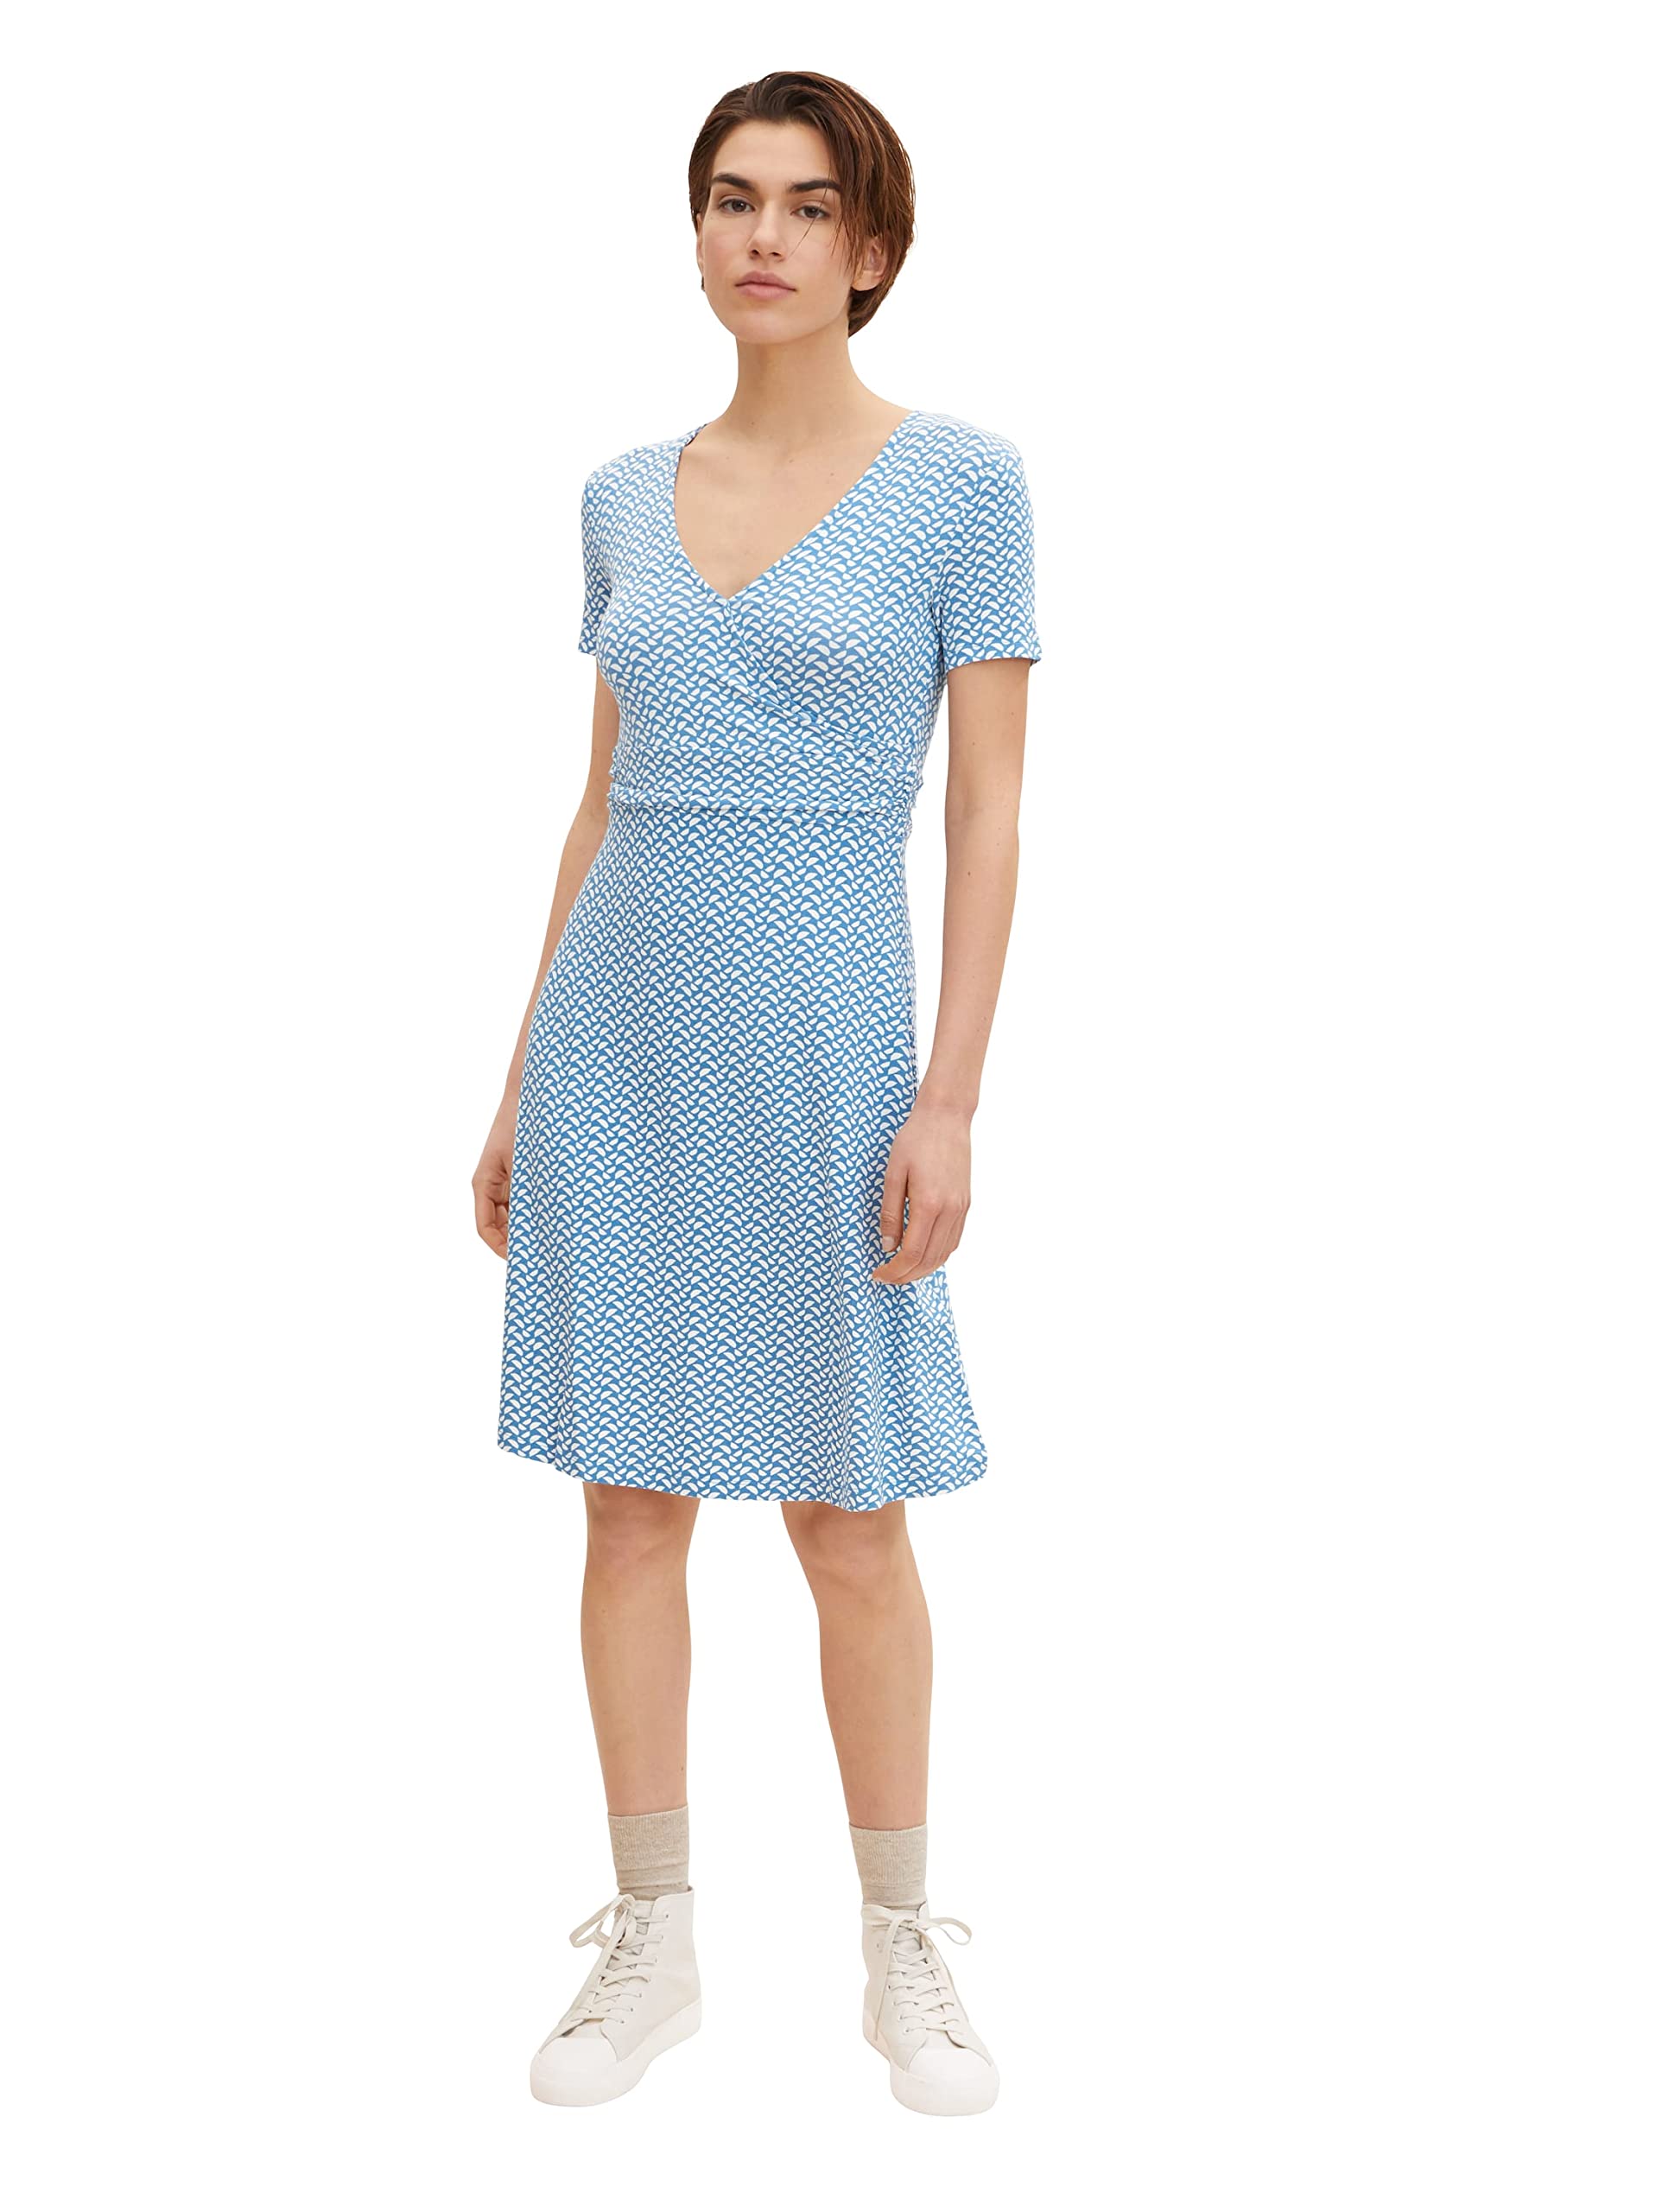 TOM TAILOR Damen Kleid in Wickeloptik 1032059, 29526 - Blue Minimal Design, 38